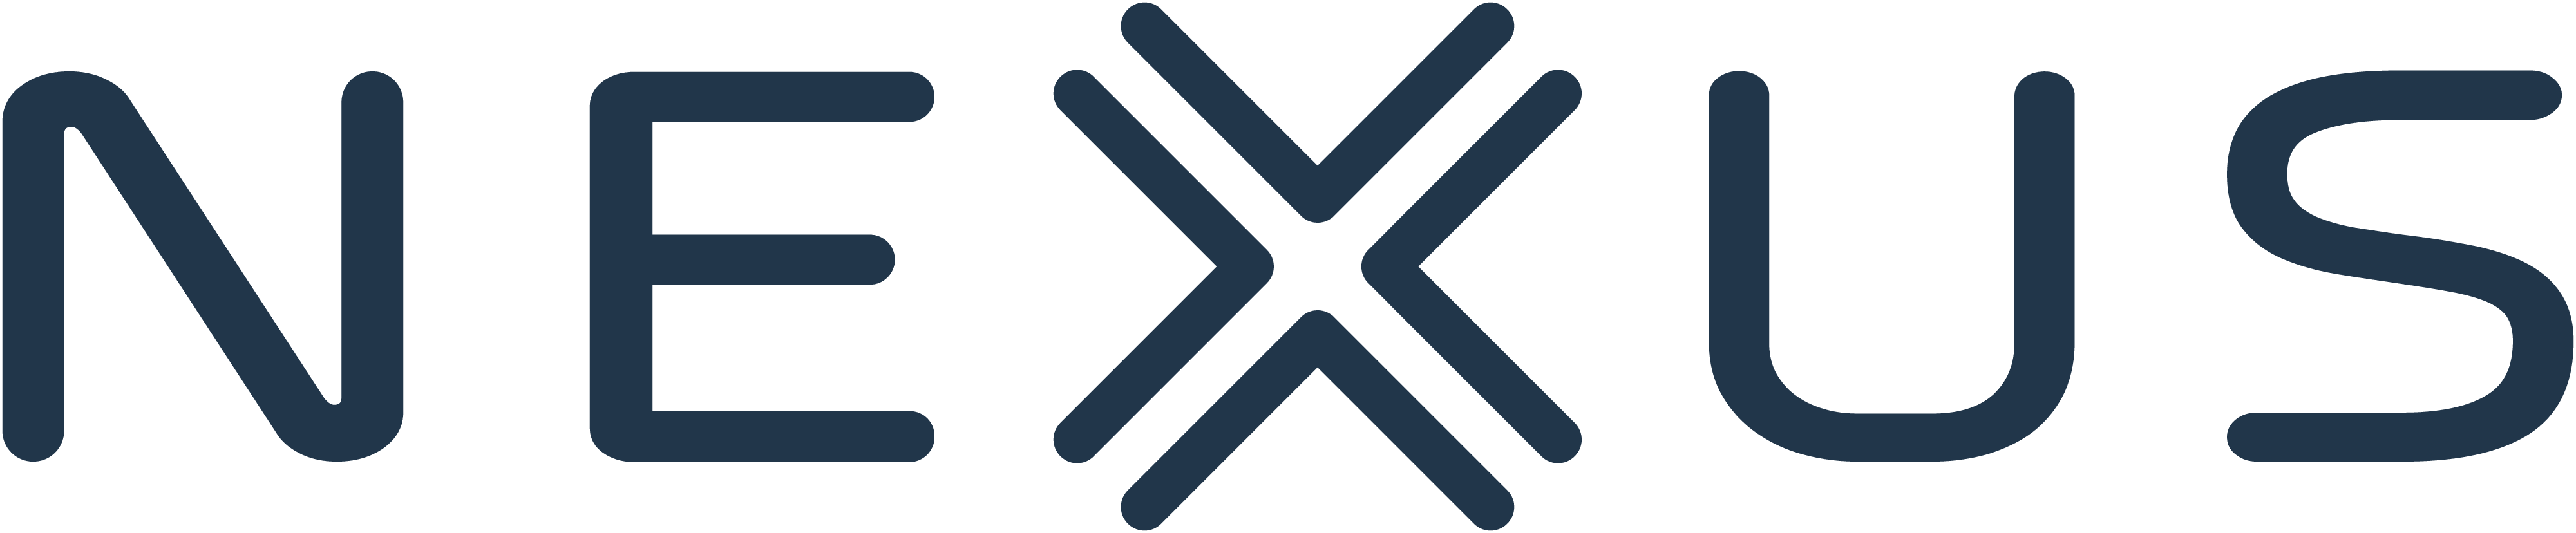 Nexxus Logo - NexusConnect: Electronic Invoice Solution